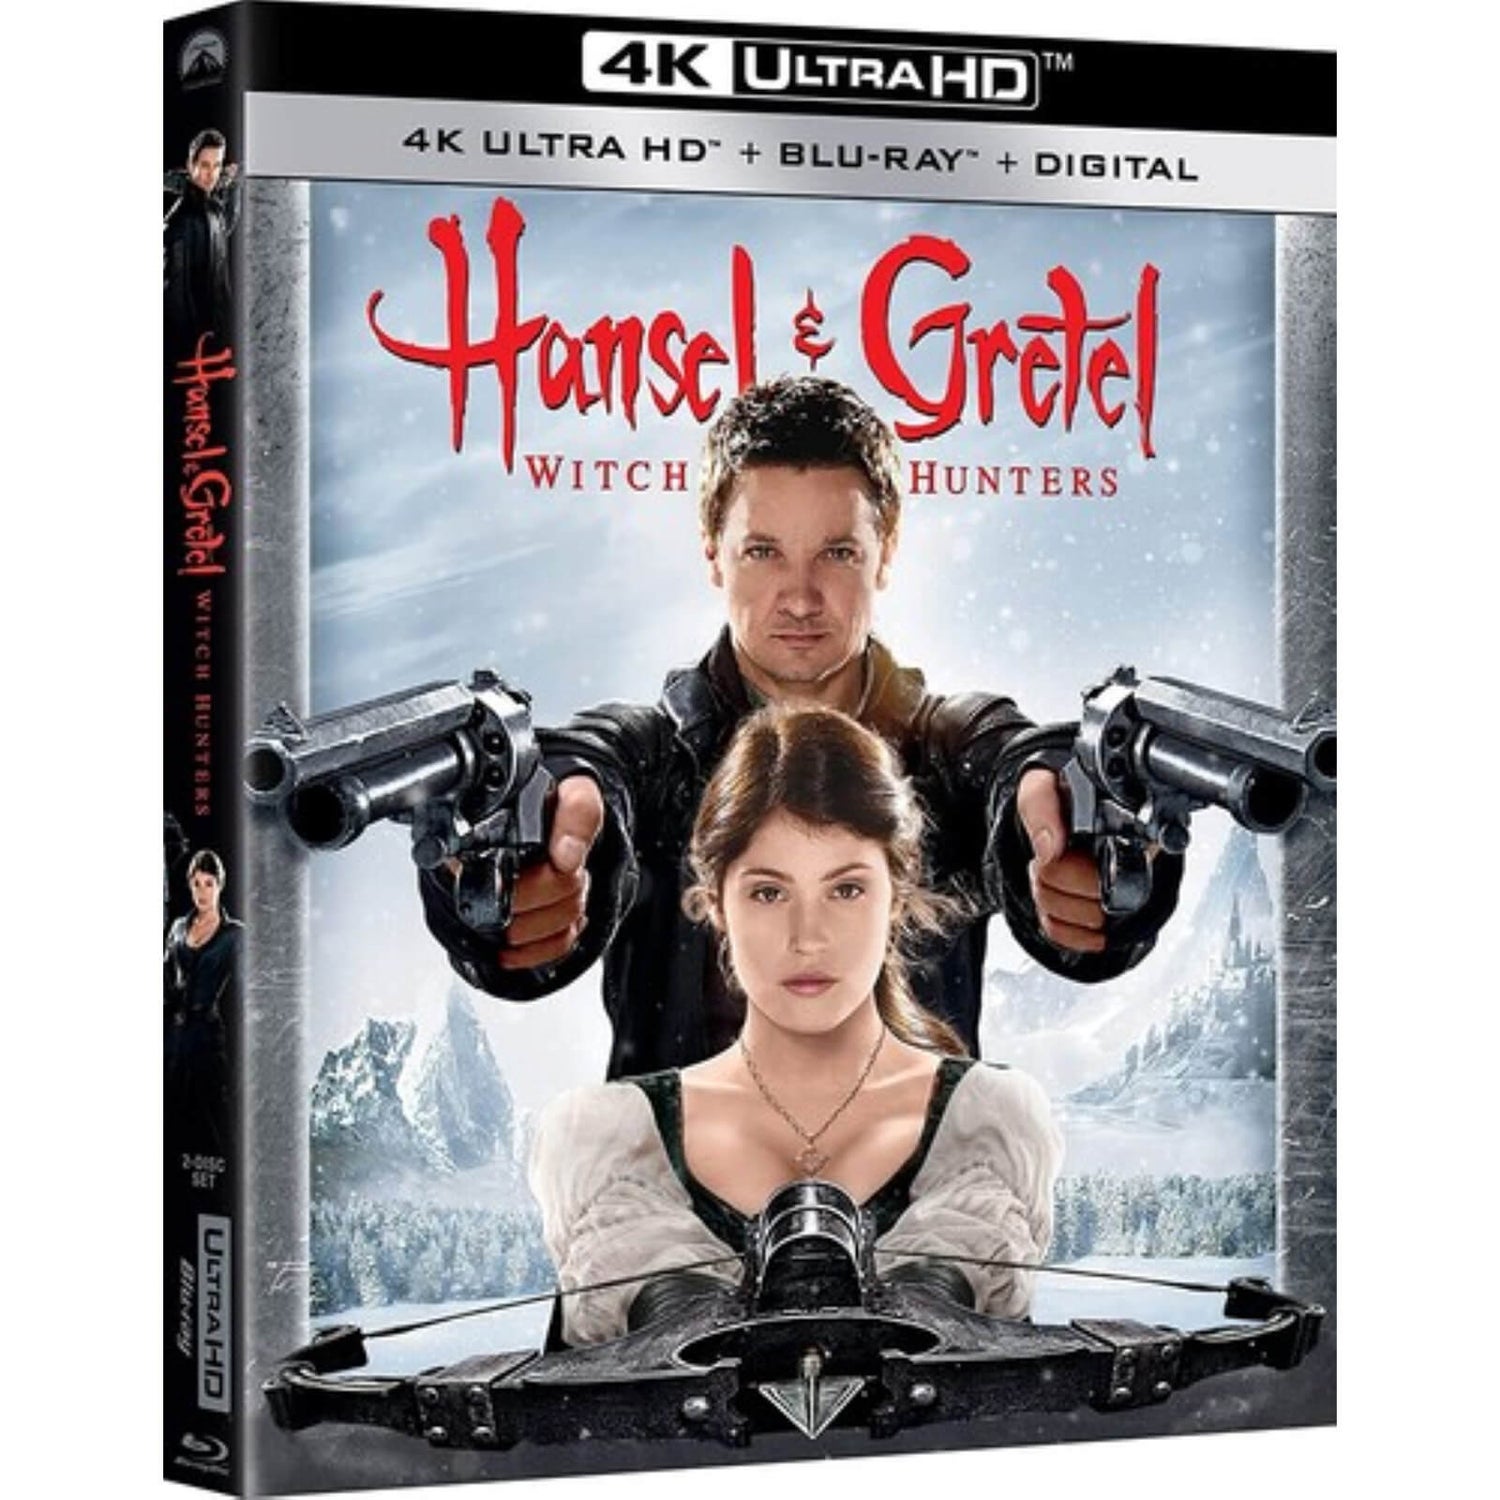 Hansel & Gretel: Witch Hunters - 4K Ultra HD (Includes Blu-ray) (US Import)